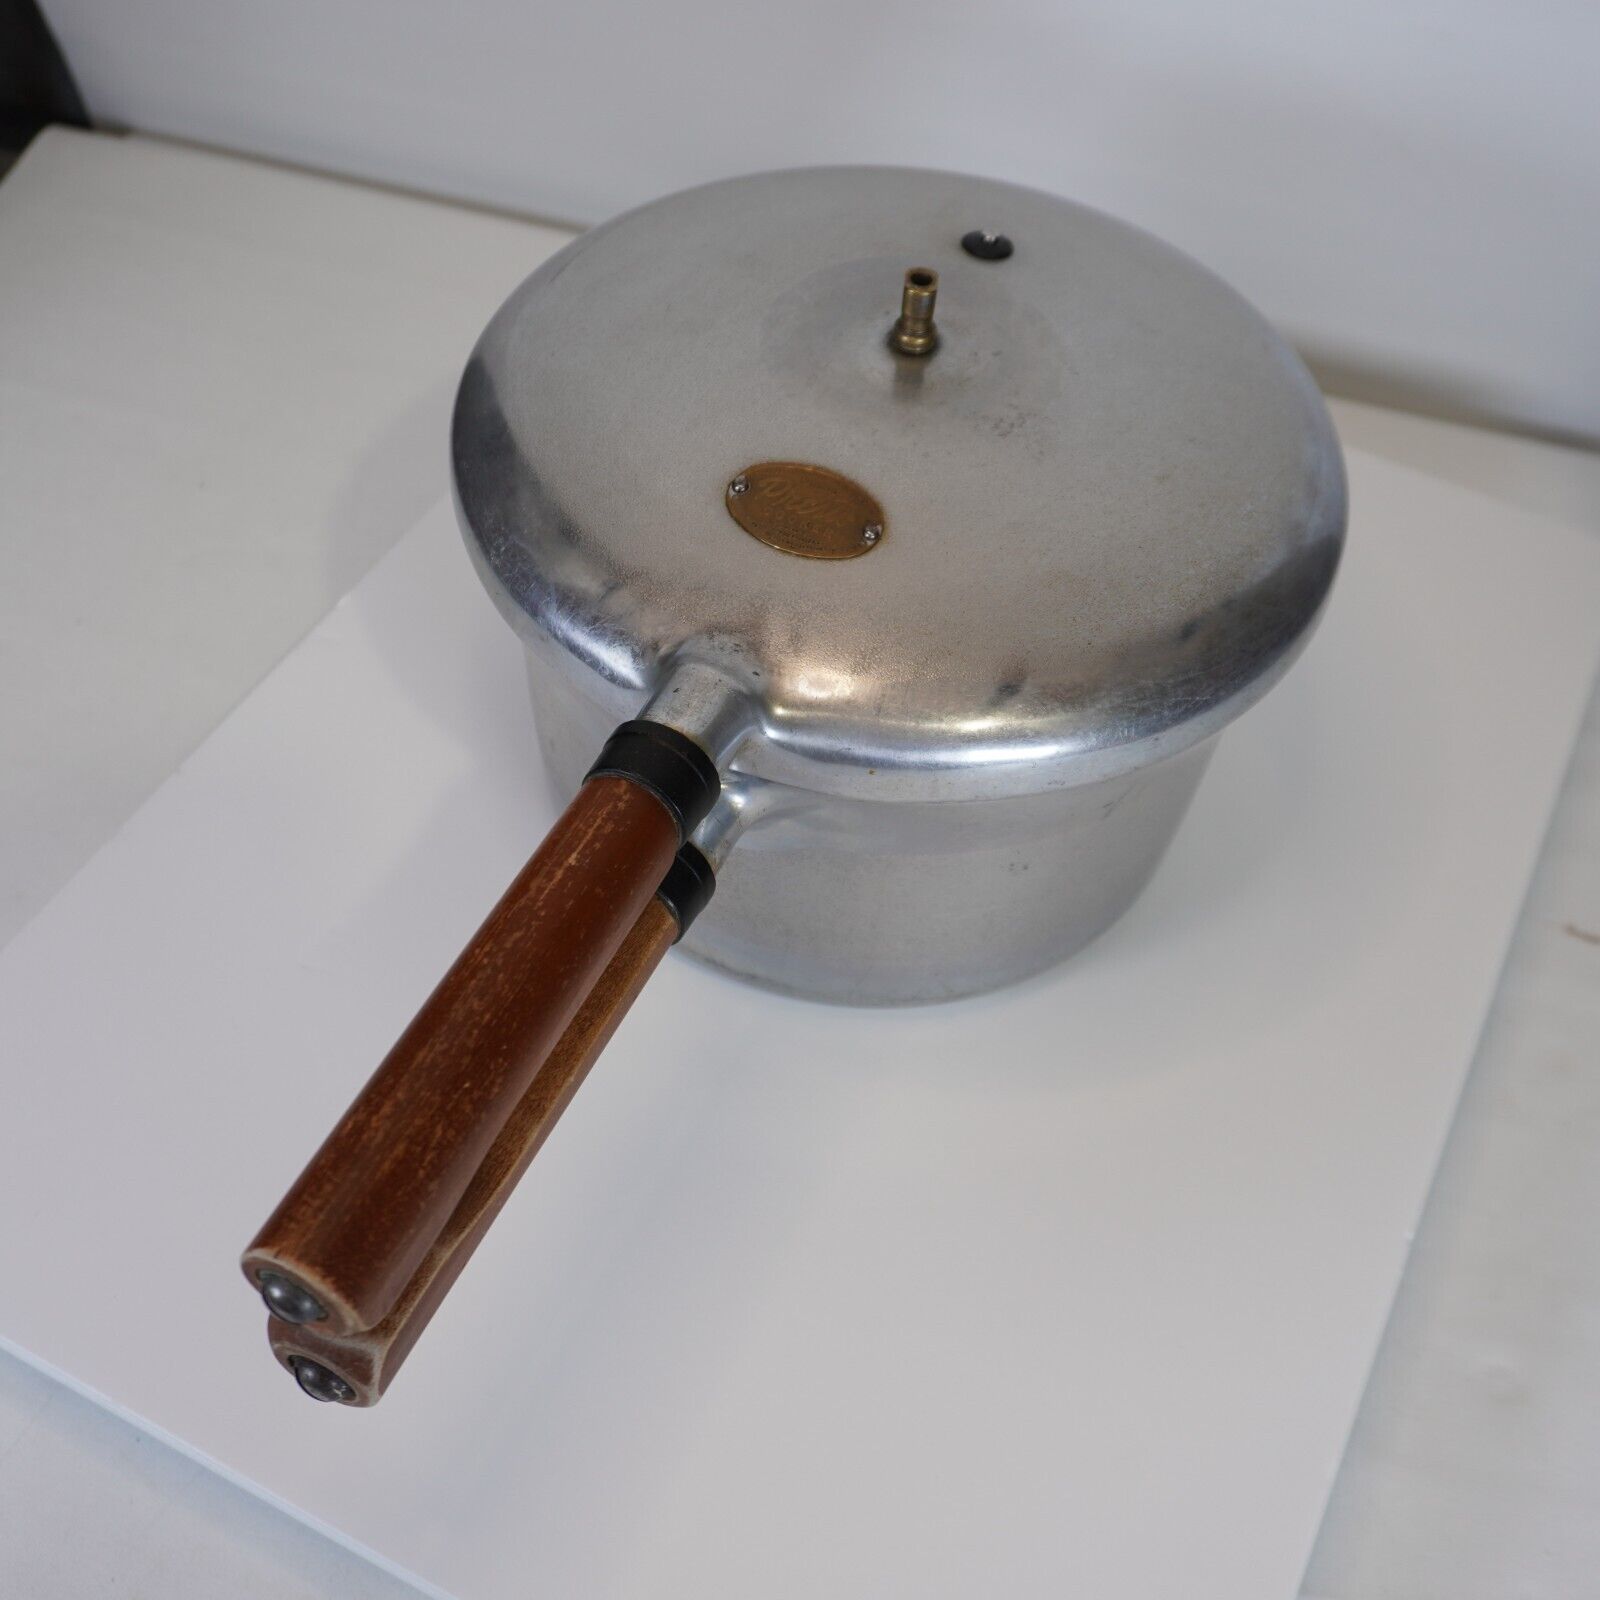 VTG National Pressure Cooker -Presto Model 40- 4 Quart, Wood Handles Made-in-USA